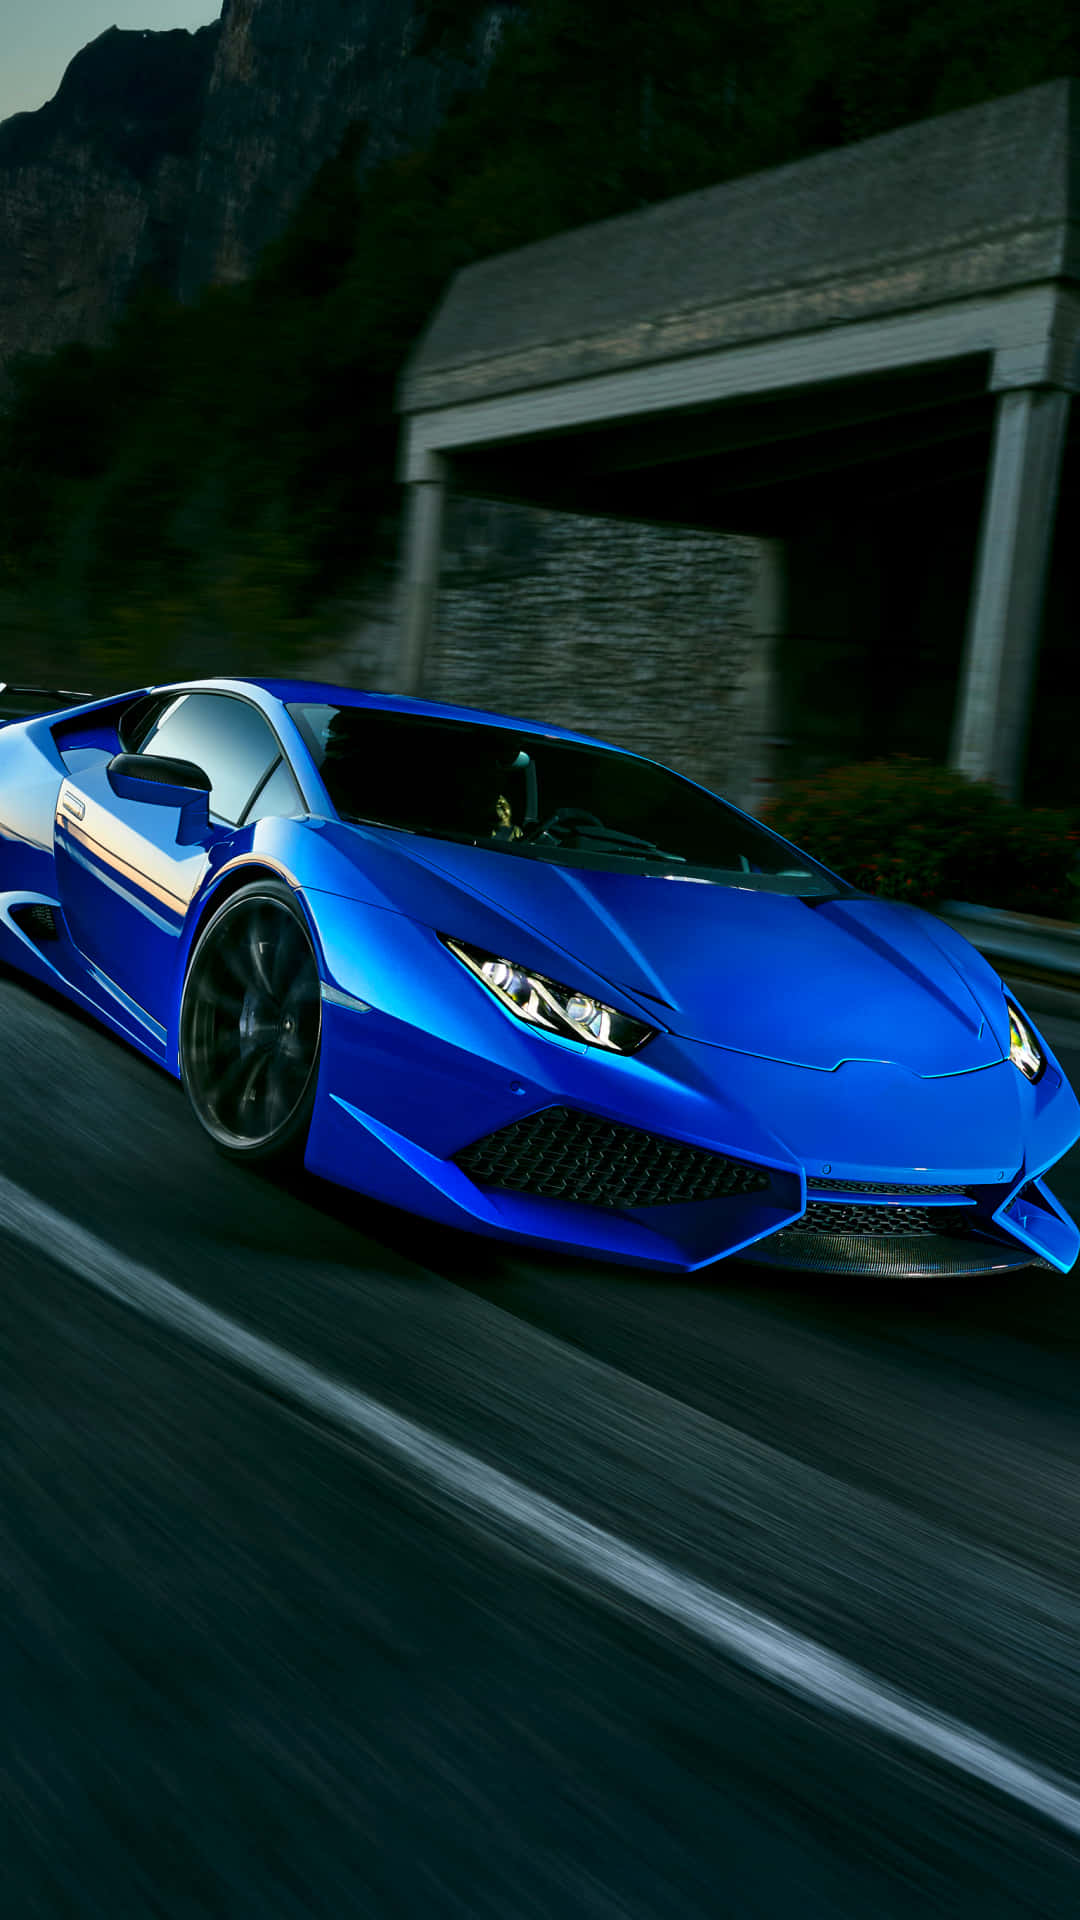 Den blå Lamborghini-kørsel giver luksusens sus. Wallpaper